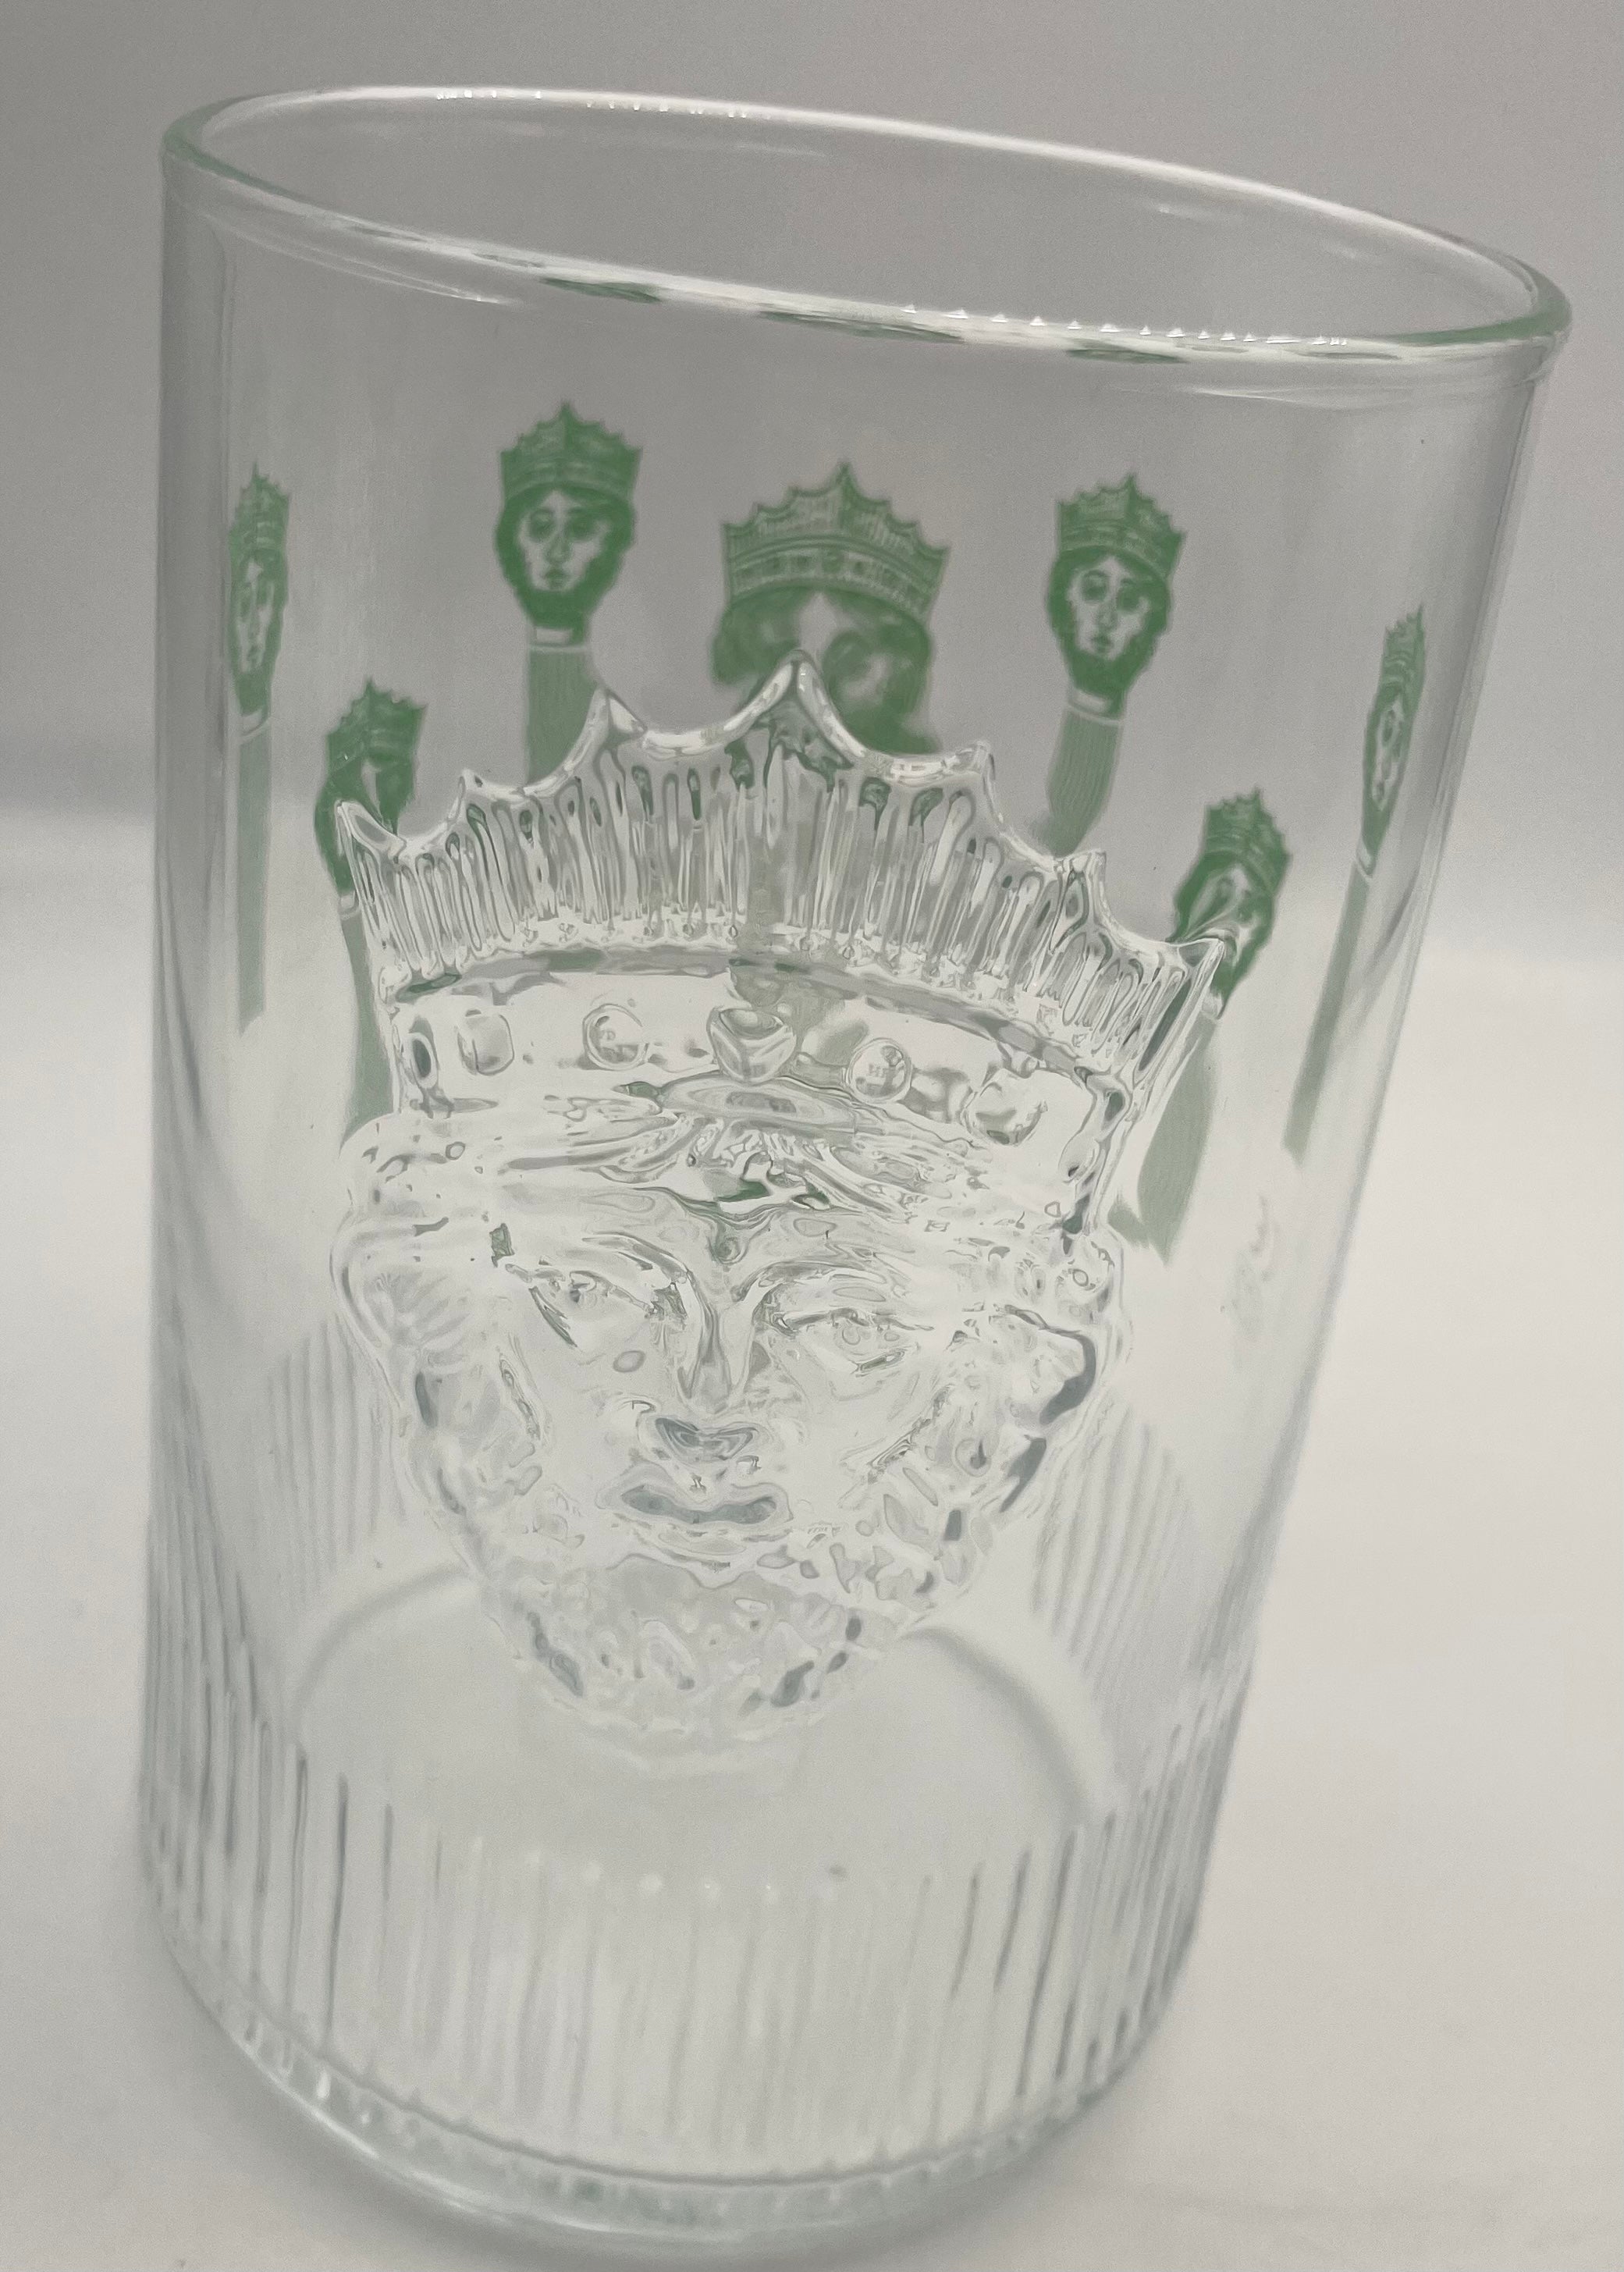 Buy Level Head Session IPA Pint Glass - Greene King Shop